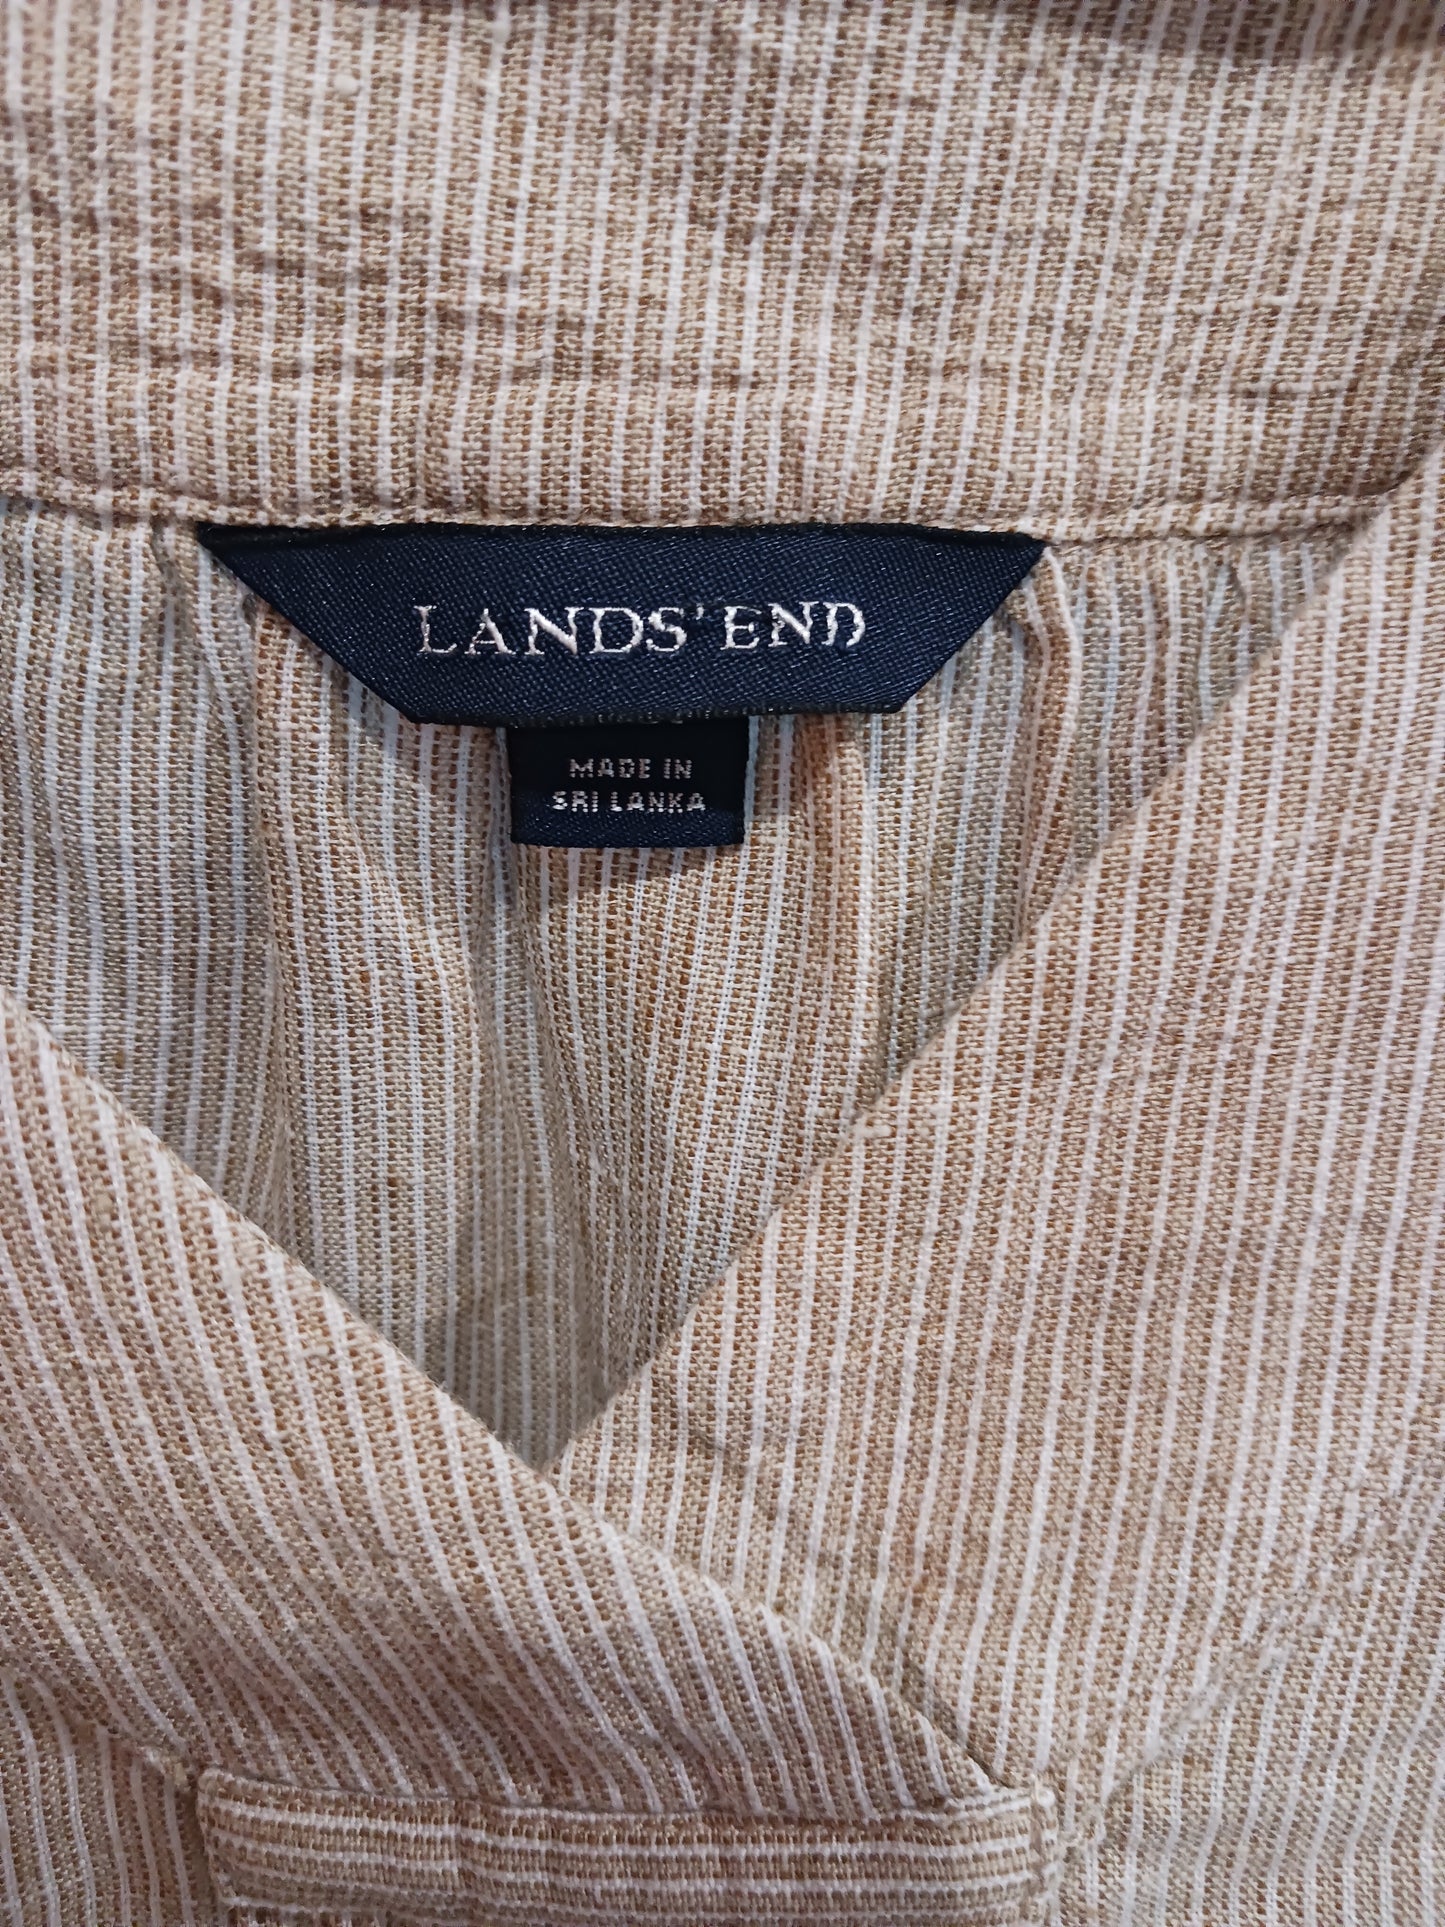 Lands End Beige Striped V-neck Sleeveless Top, Size XL 18/20